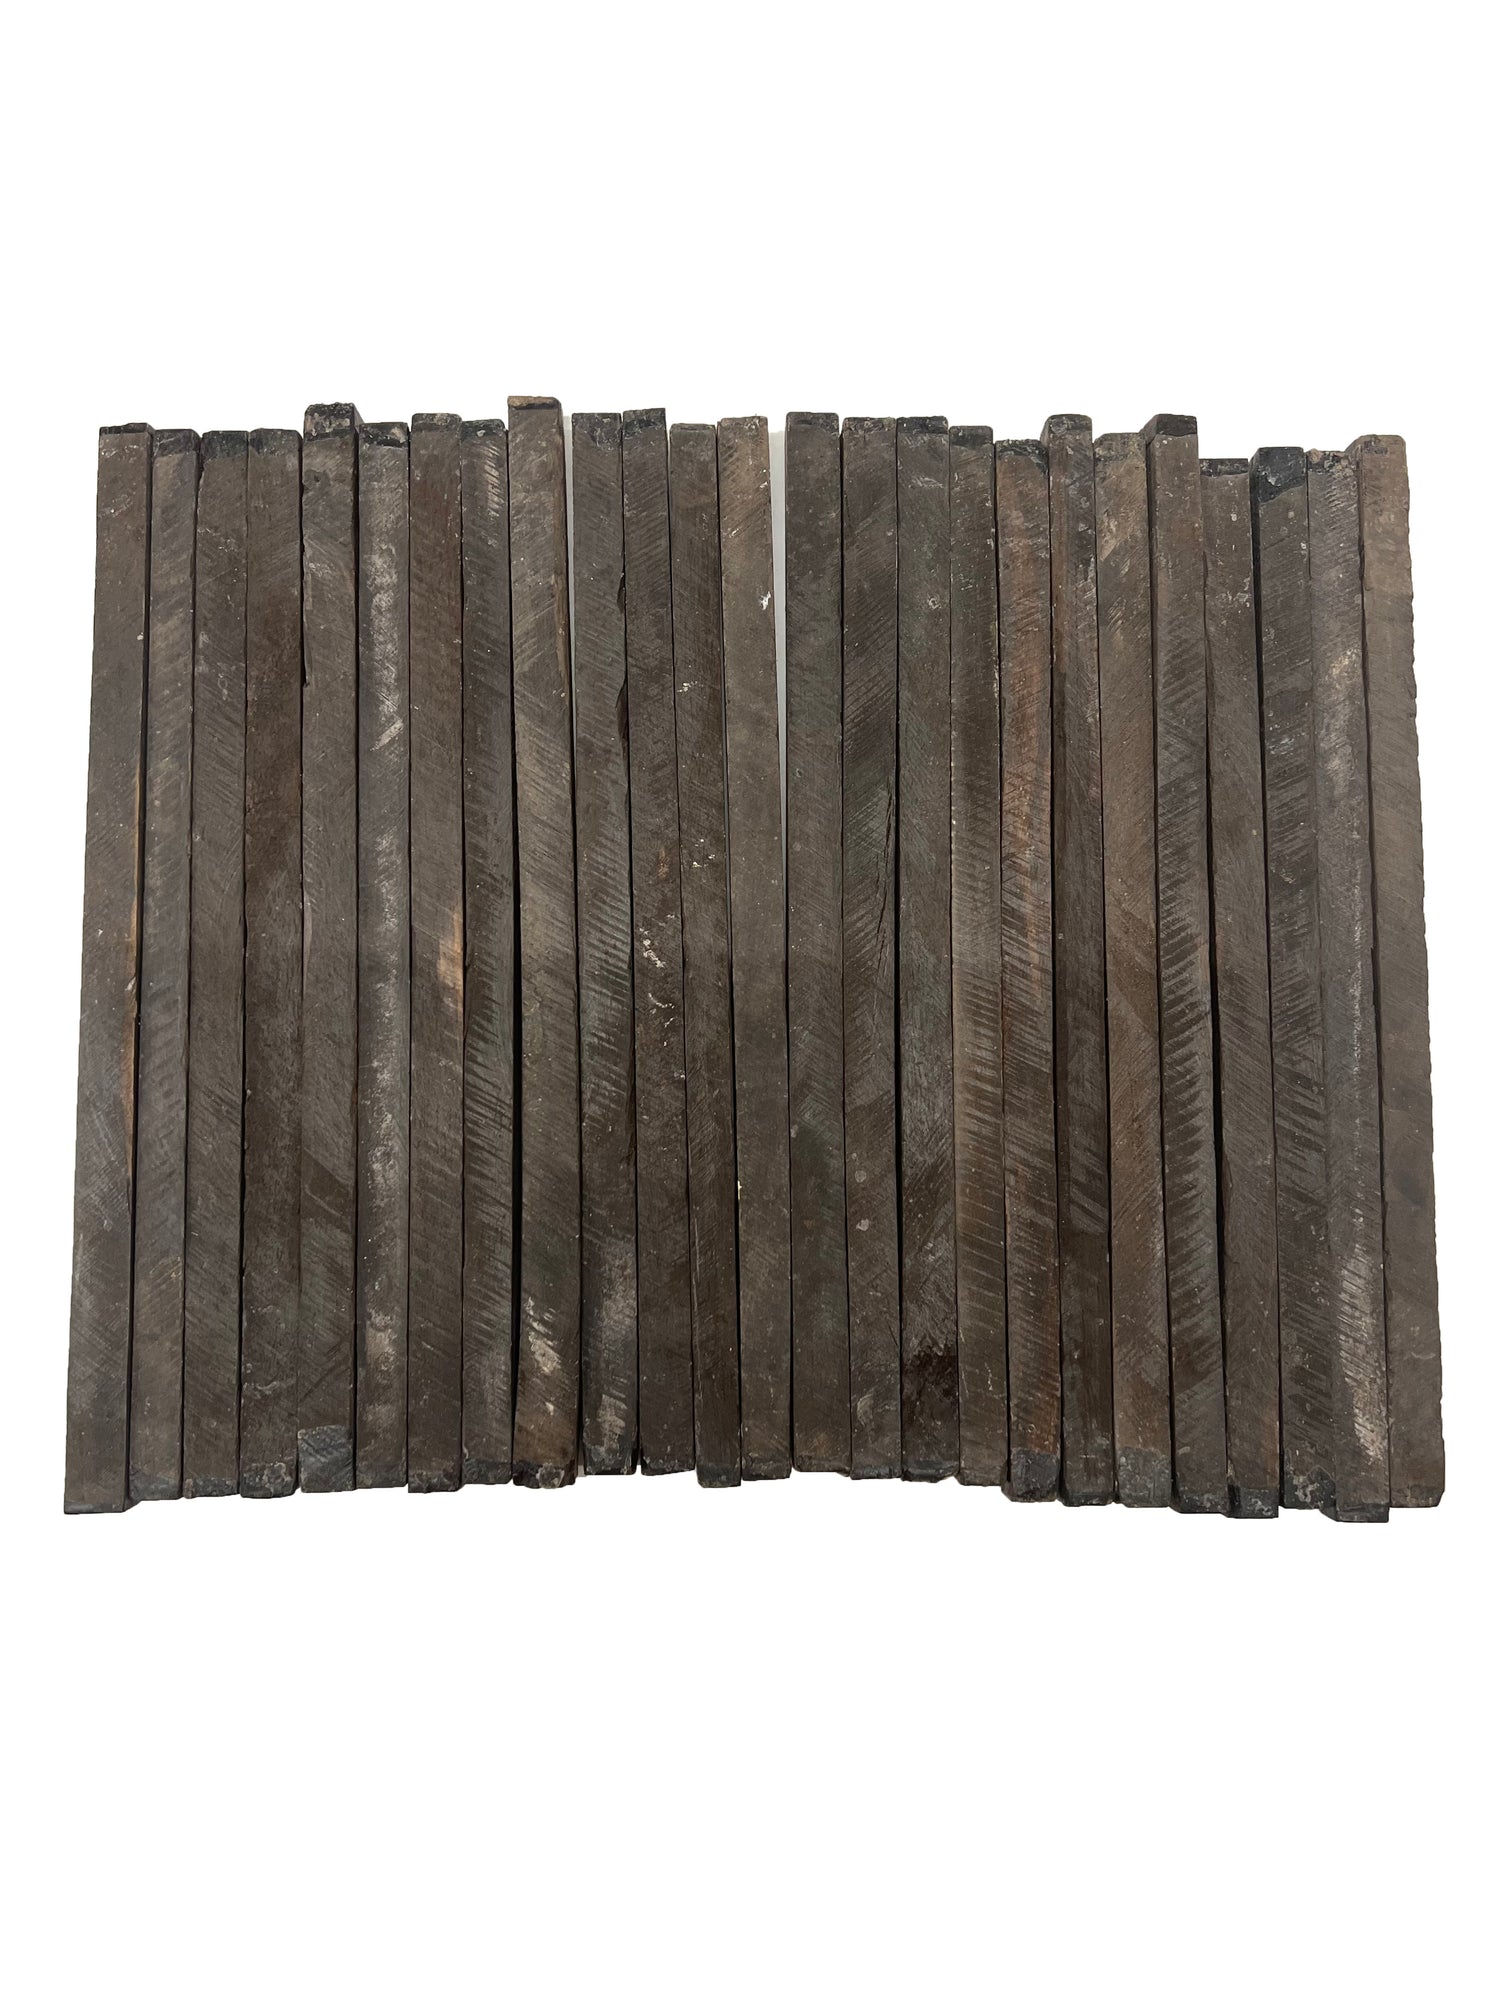 Gaboon Ebony 1/2” x 1/2” x 12” -Turning Square / Inlay / Decoration Wood Blanks - Exotic Wood Zone - Buy online Across USA 